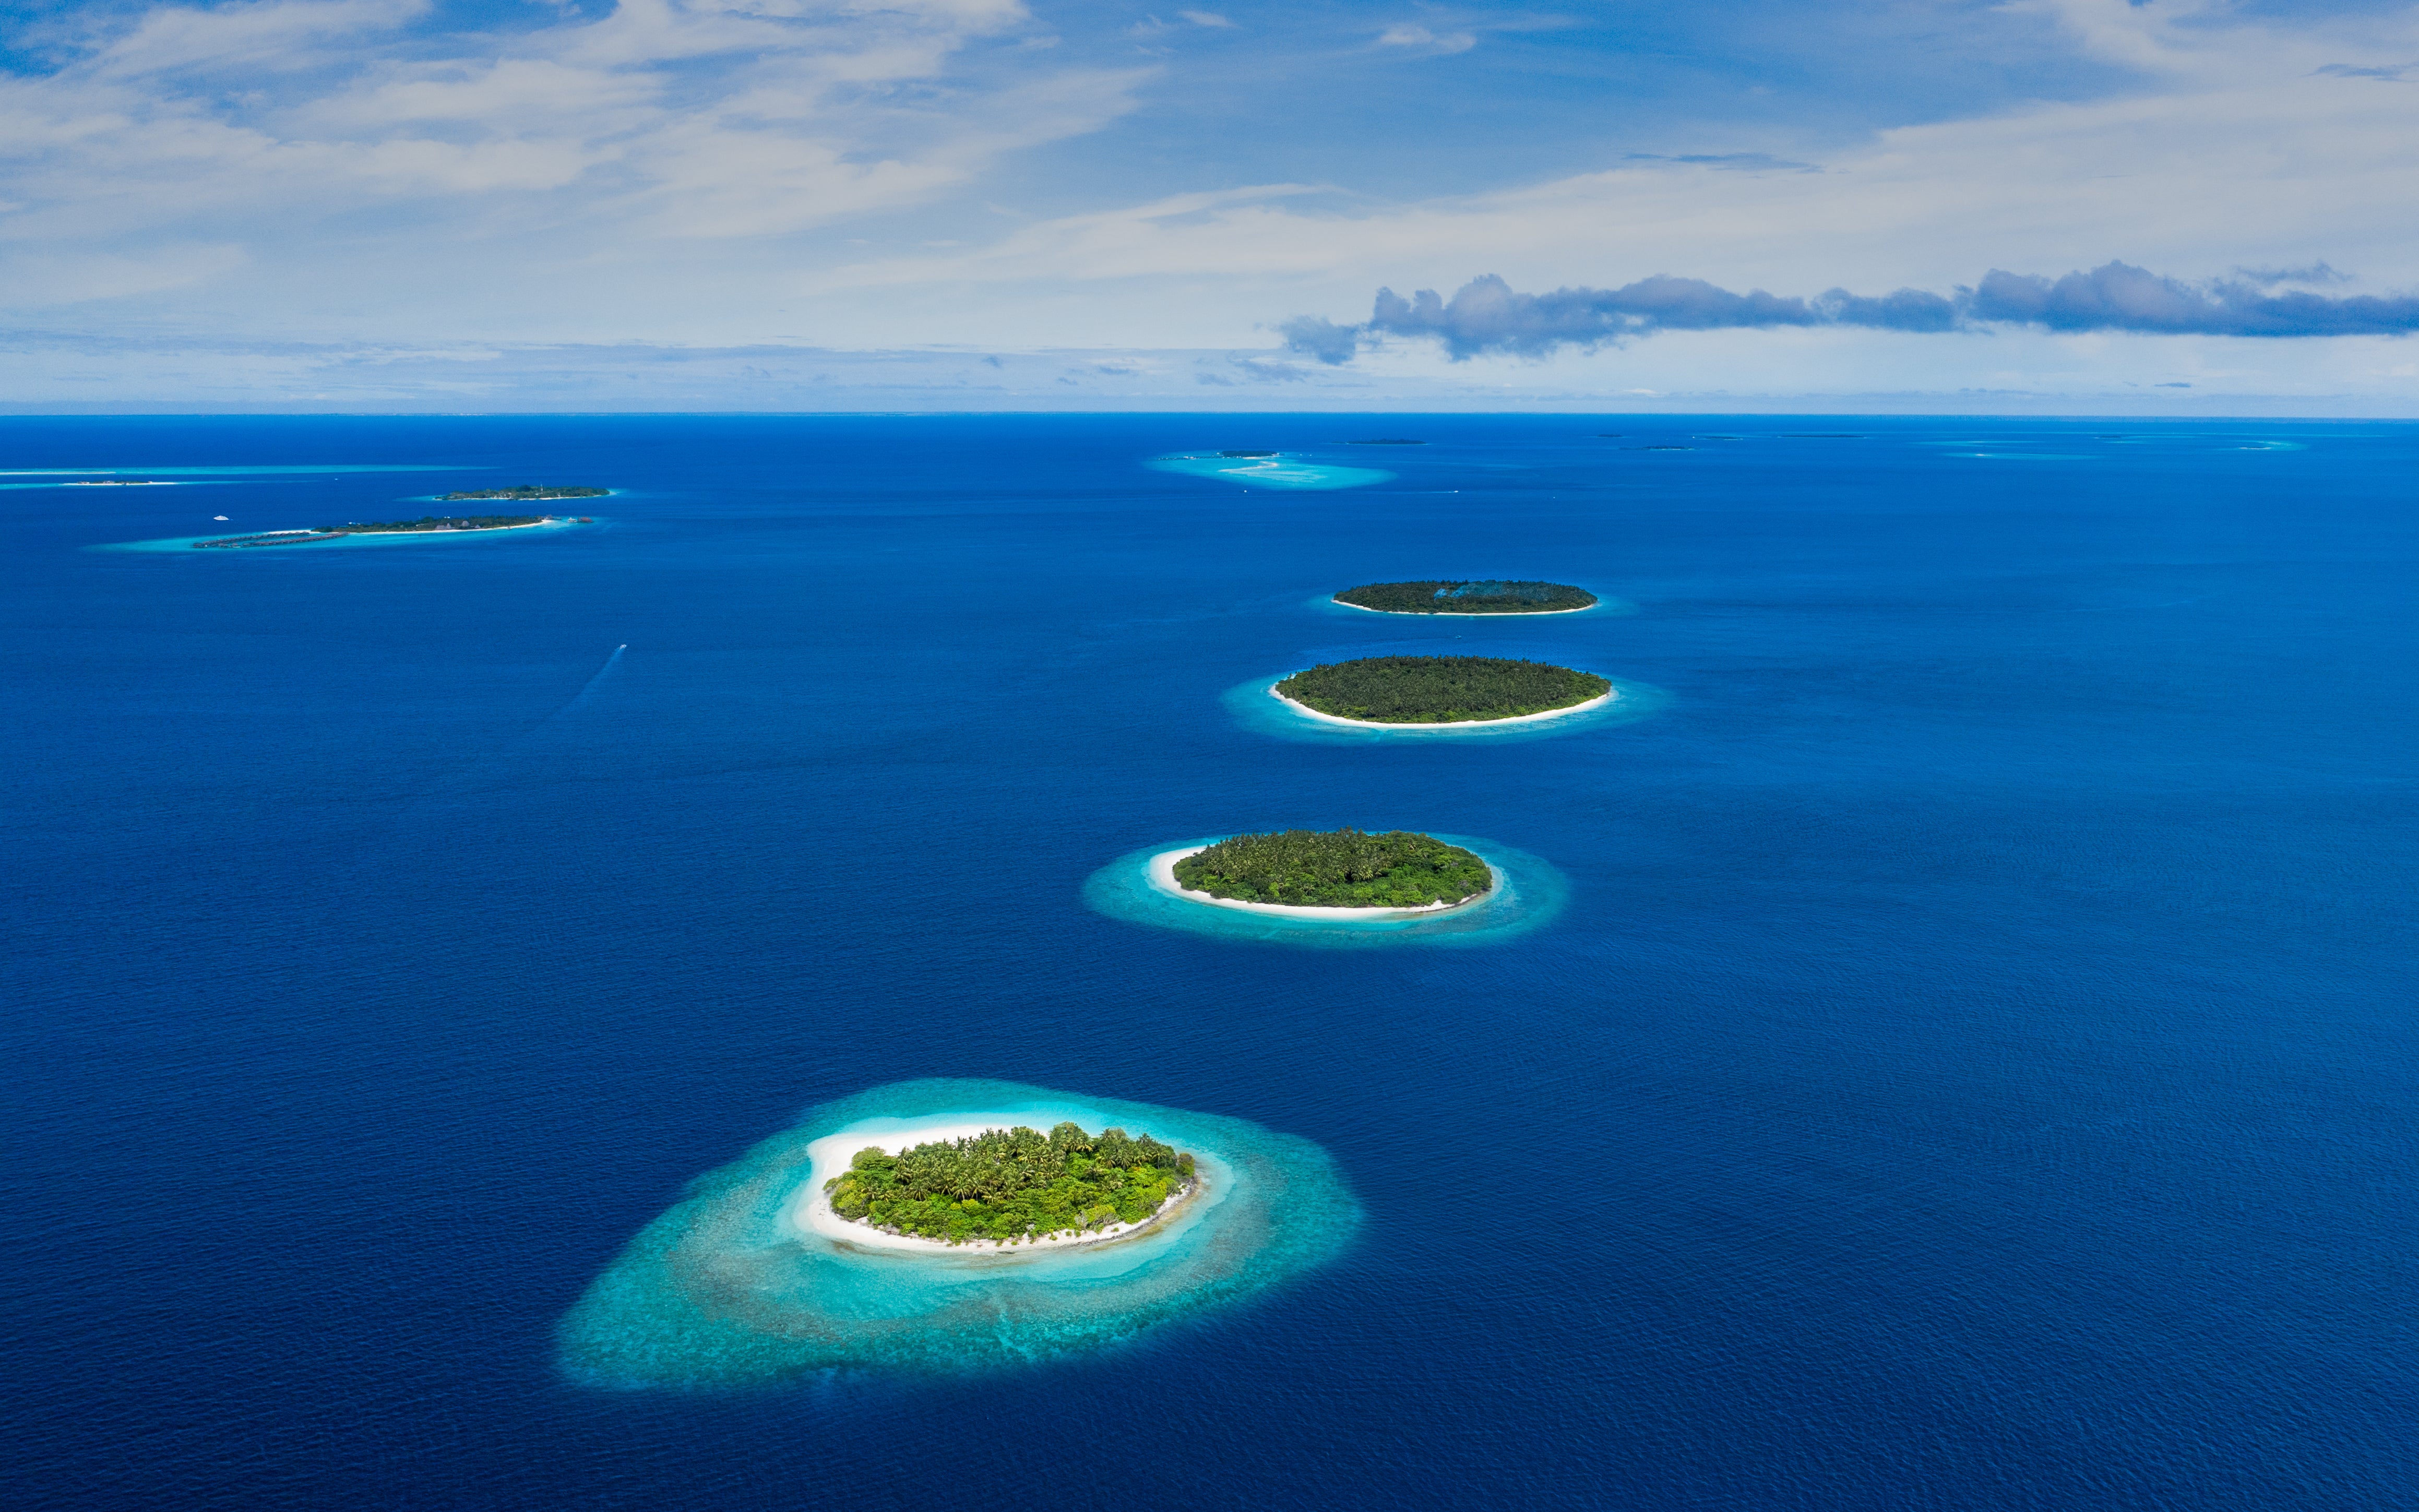 People live on islands. Мальдивы Курамати Исланд. Атолл Адду Мальдивы. Архипелаг Туамоту. Индийский океан Мальдивы.